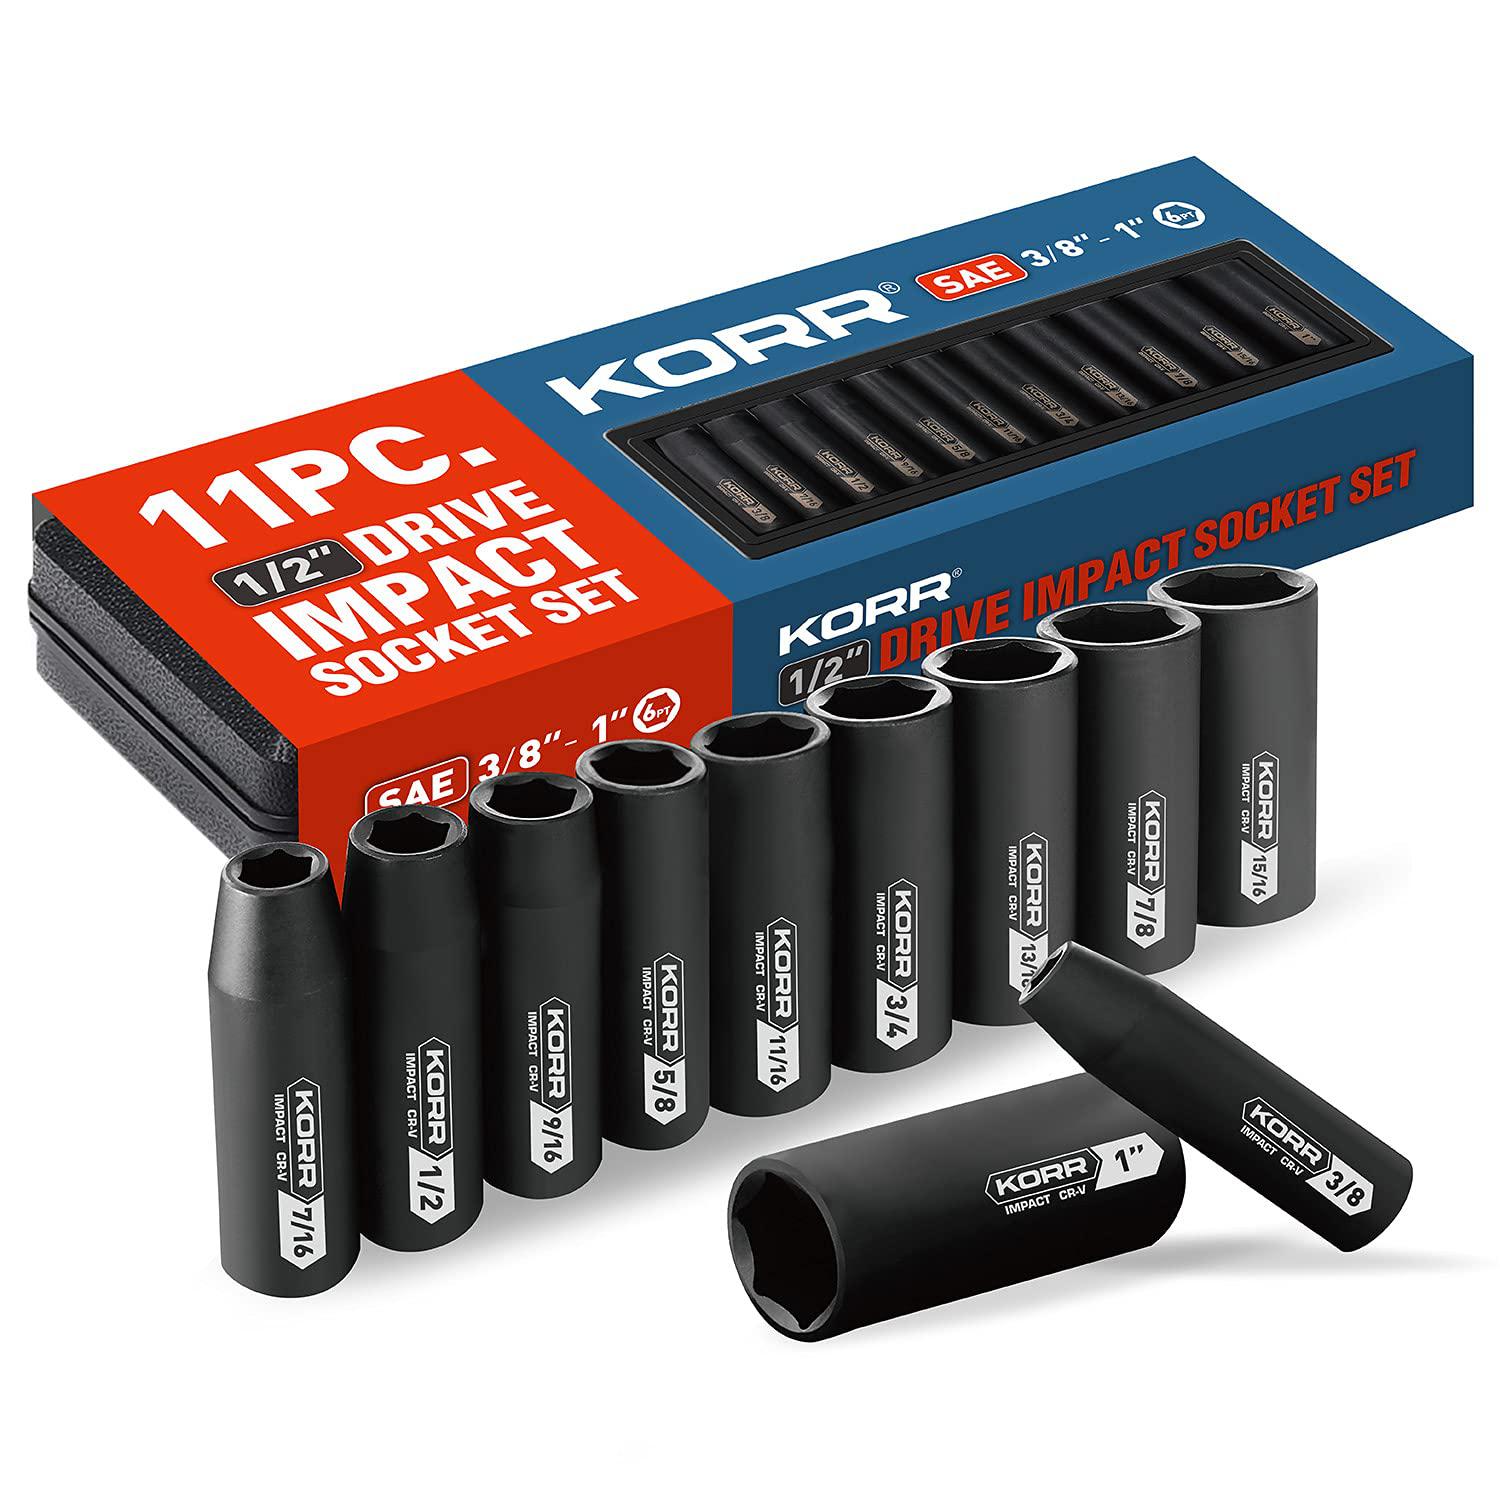 korr tools kss001 11pc impact socket set, 6-point, 1/2-inch drive sae deep socket set